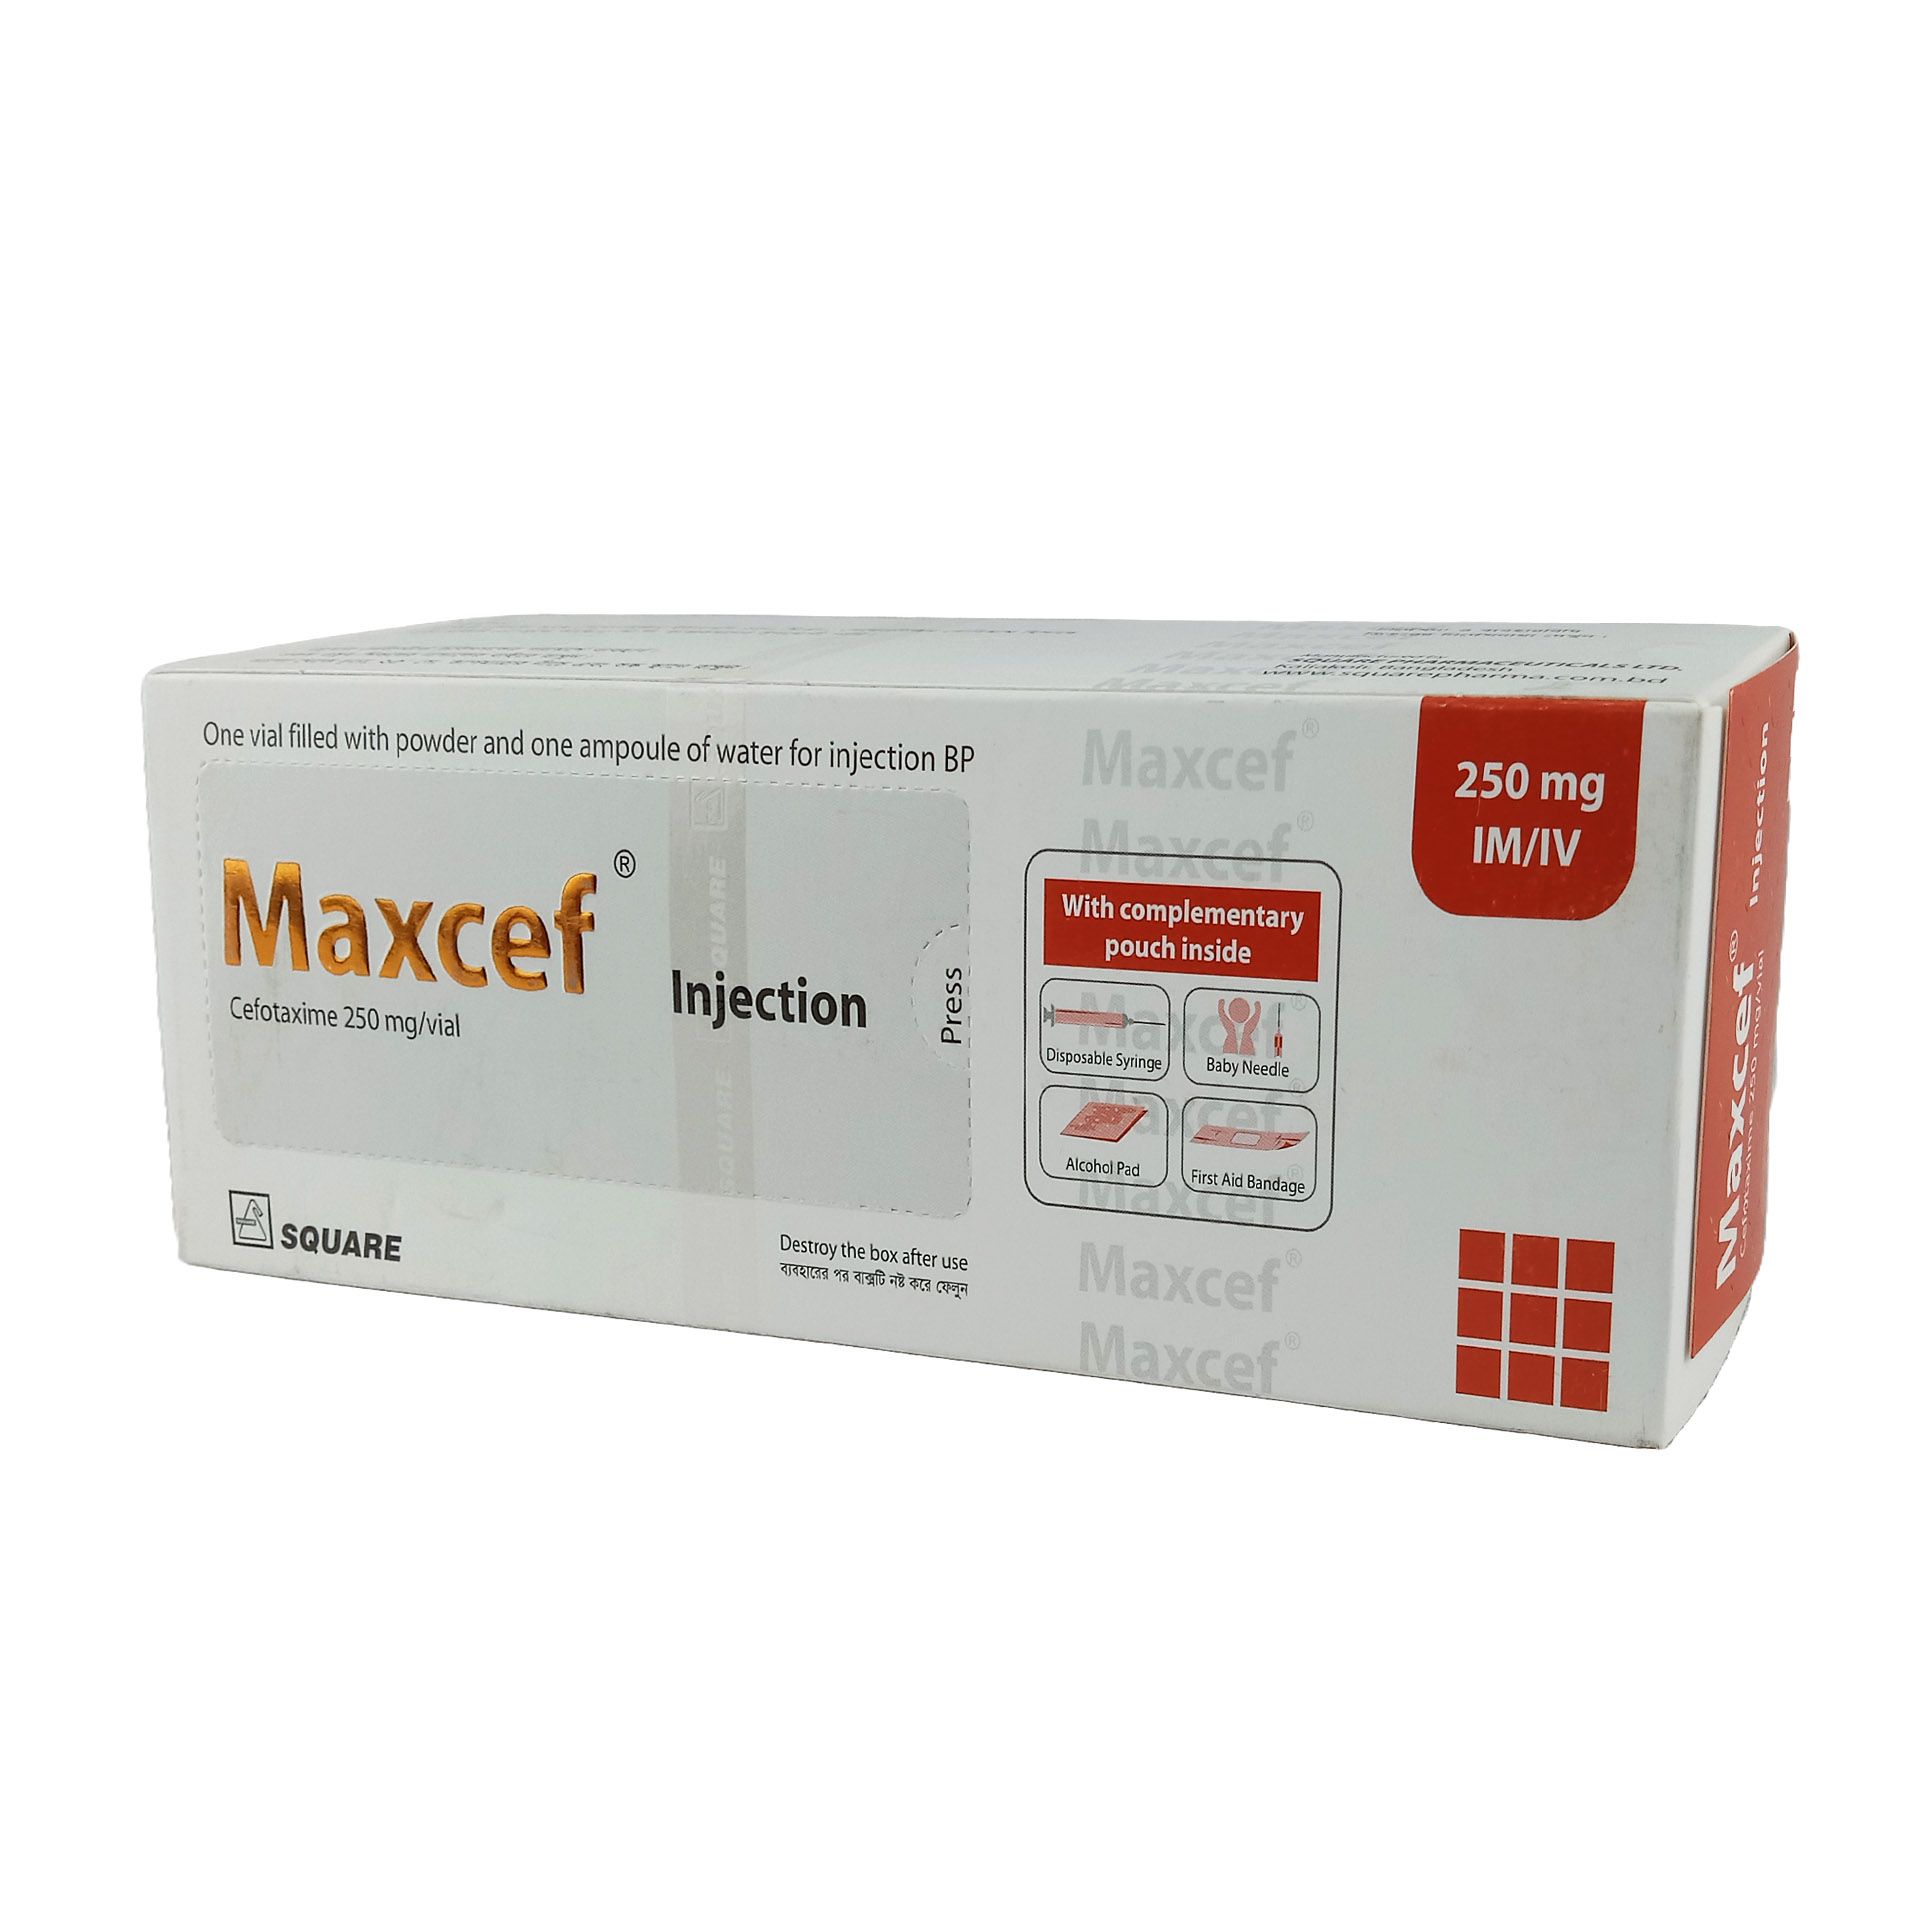 Maxcef IV/IM 250mg/vial Injection